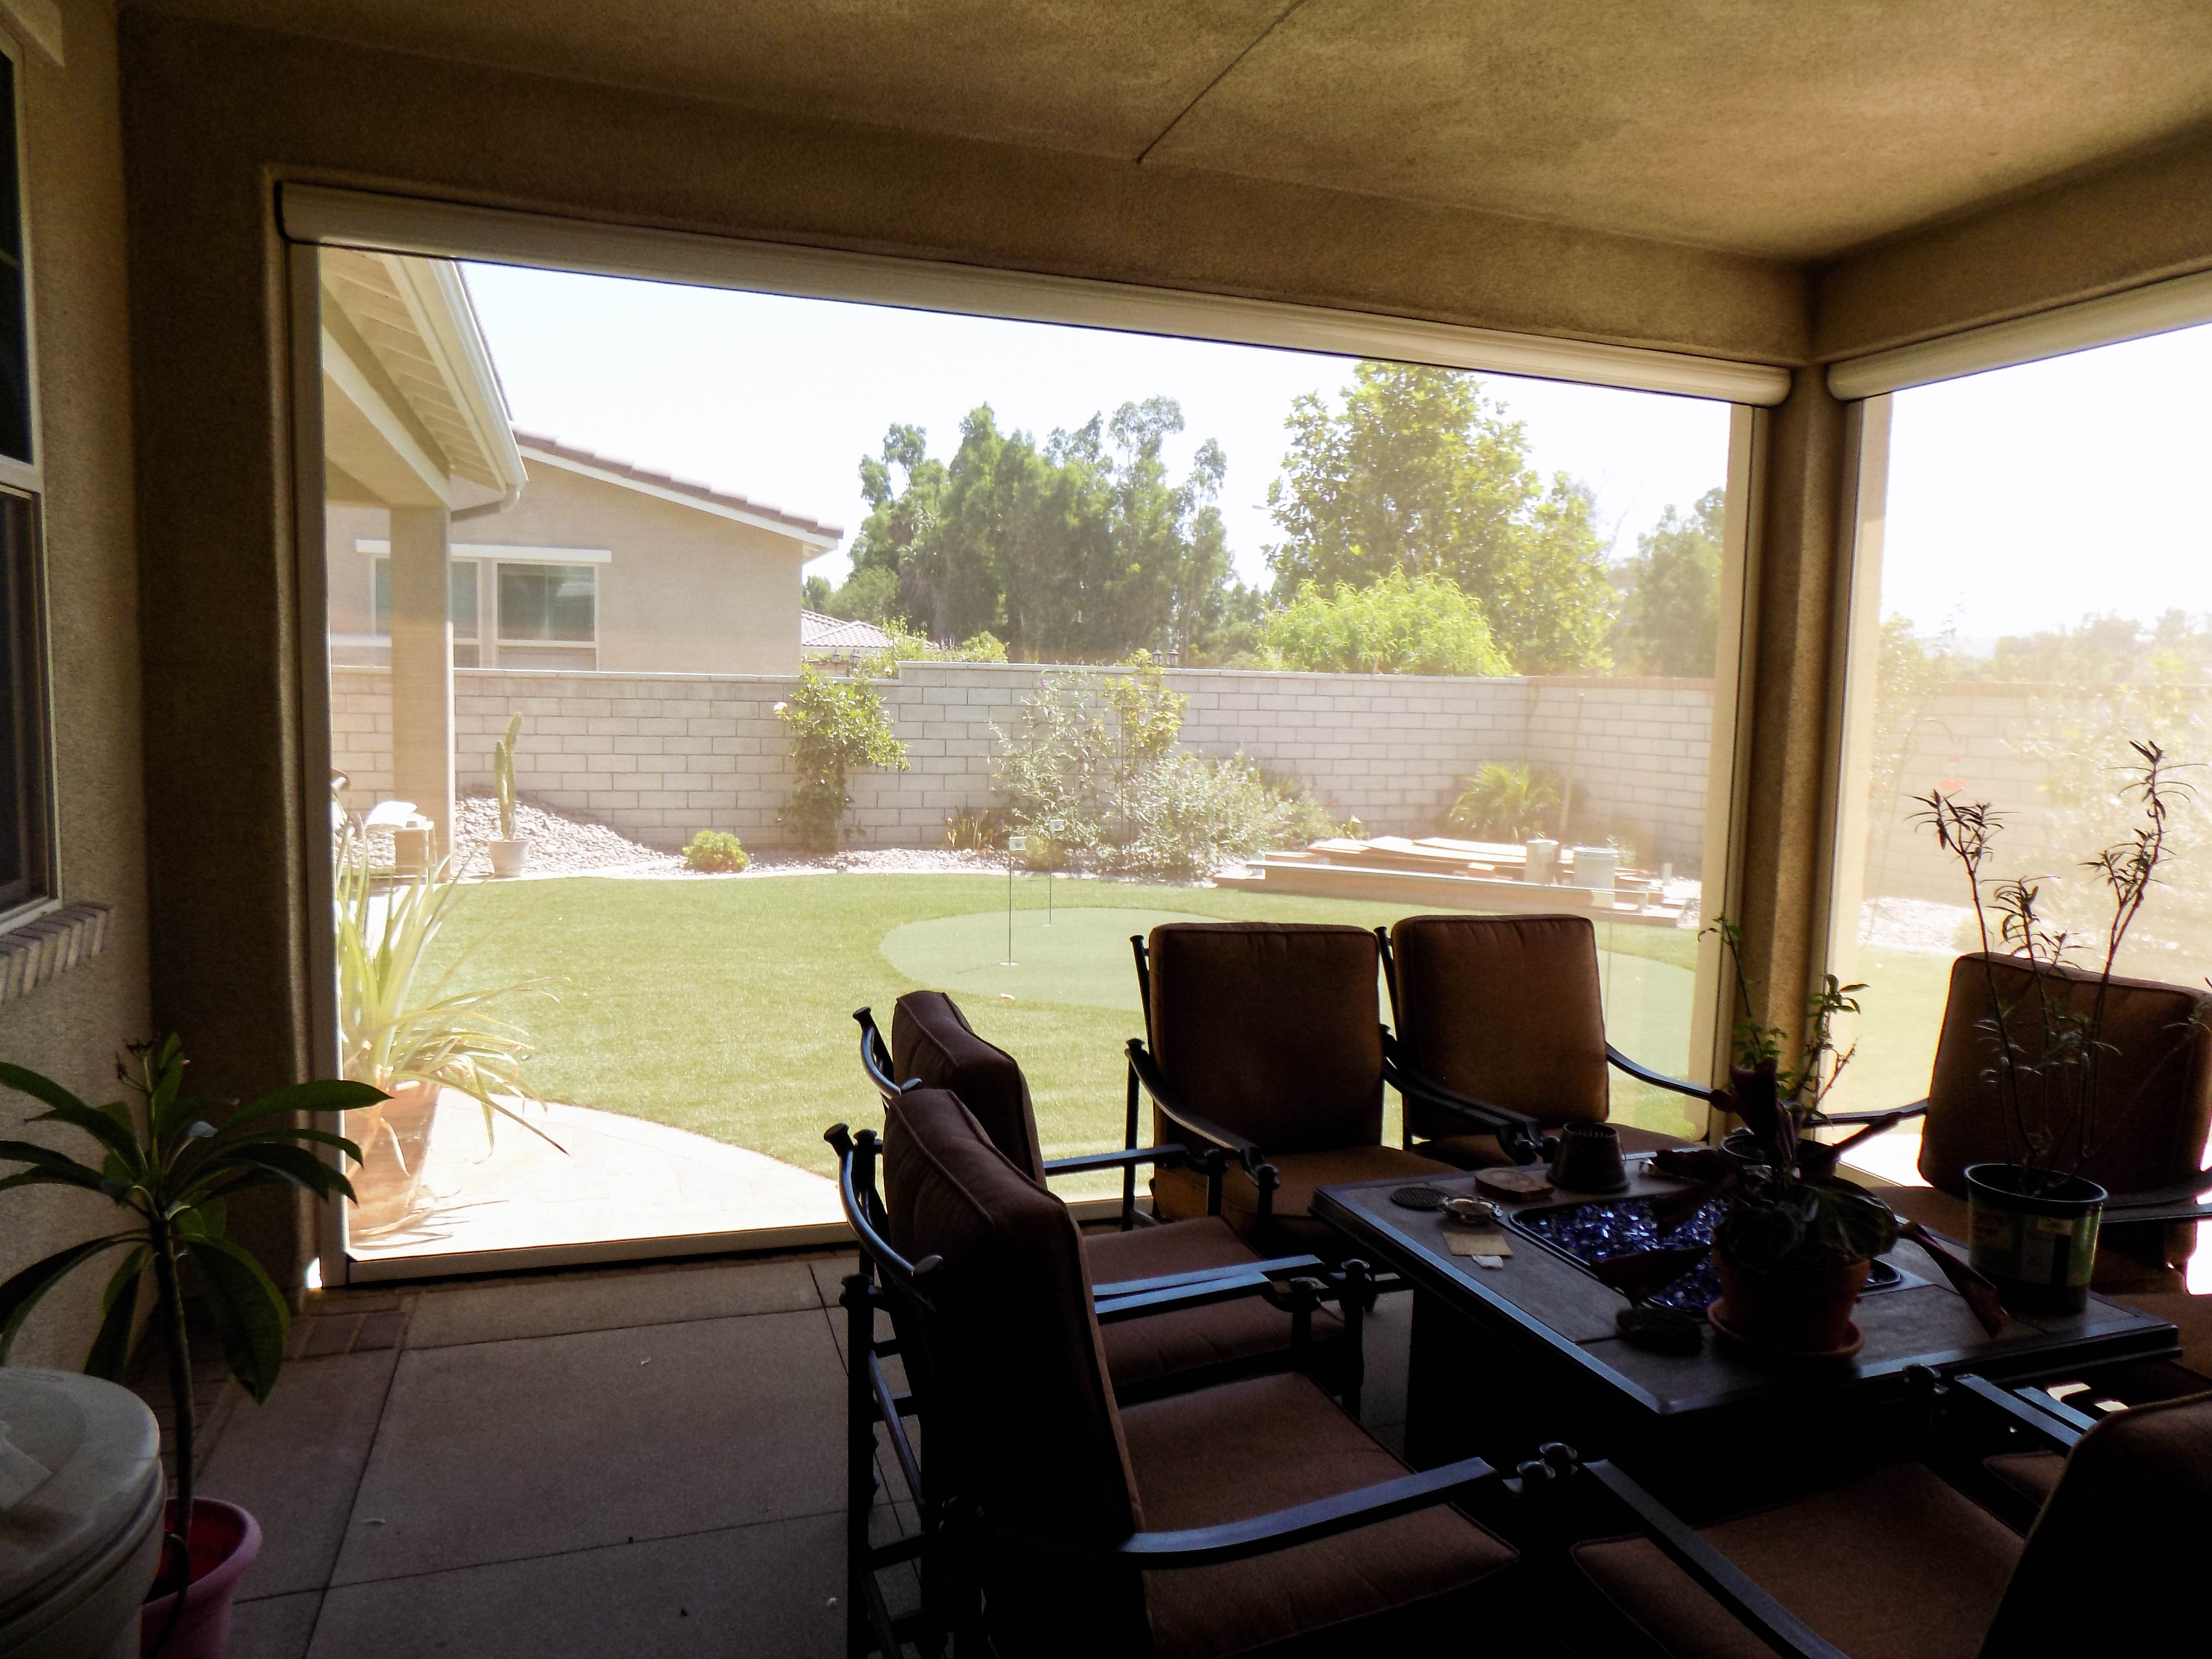 California Room Motorized Power Screens on home in San Bernardino County, CA.